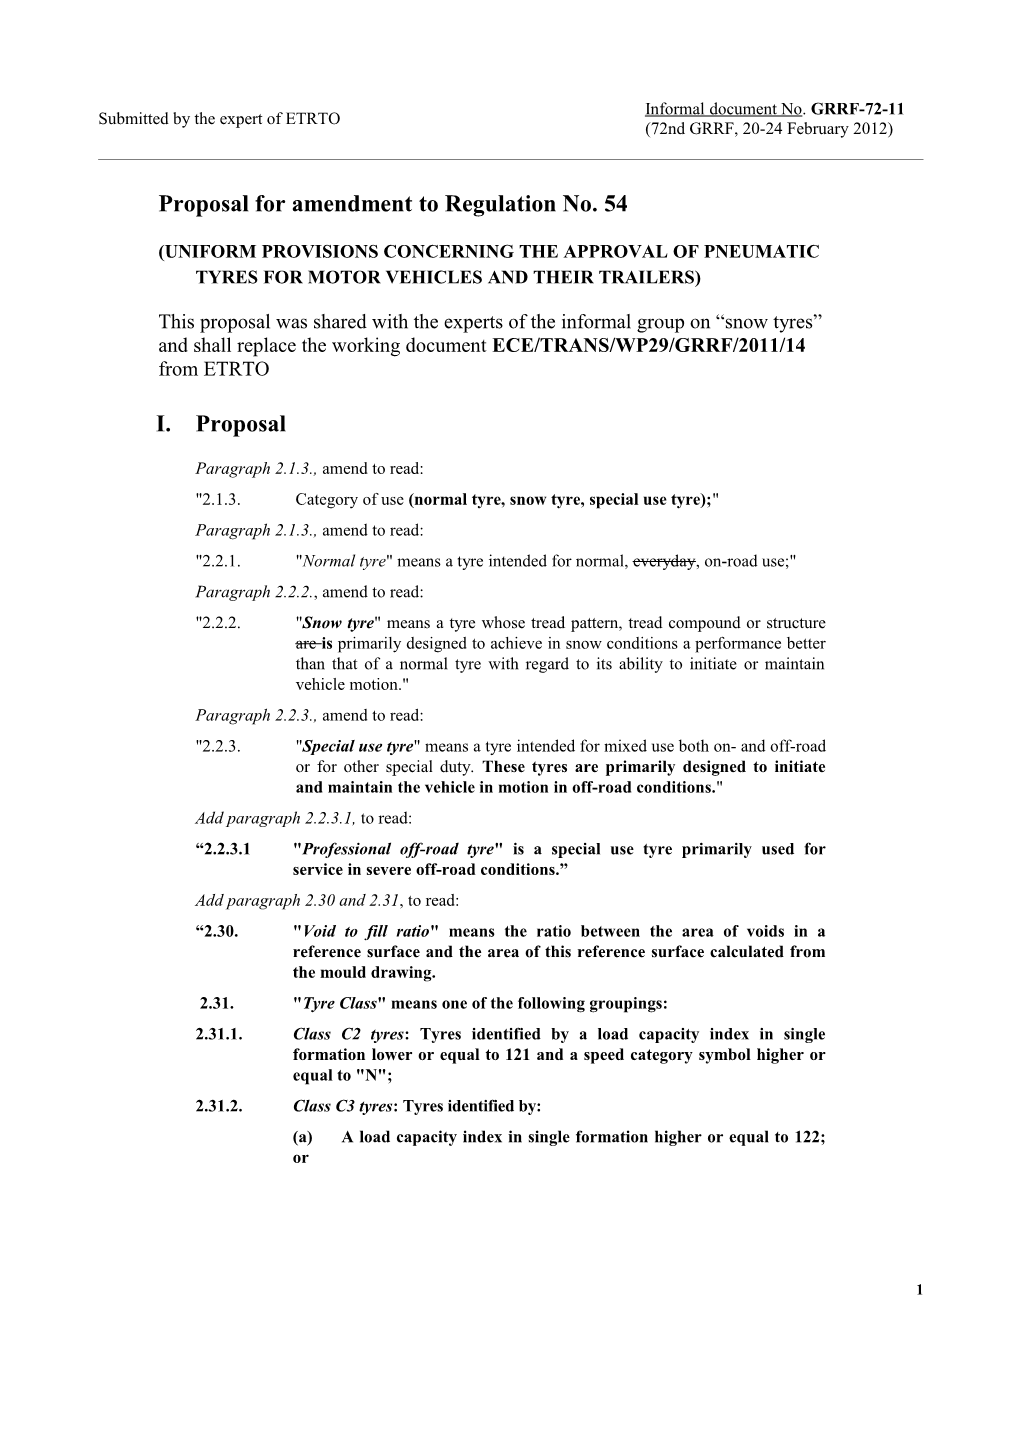 Proposal for Amendment to Regulation No. 54